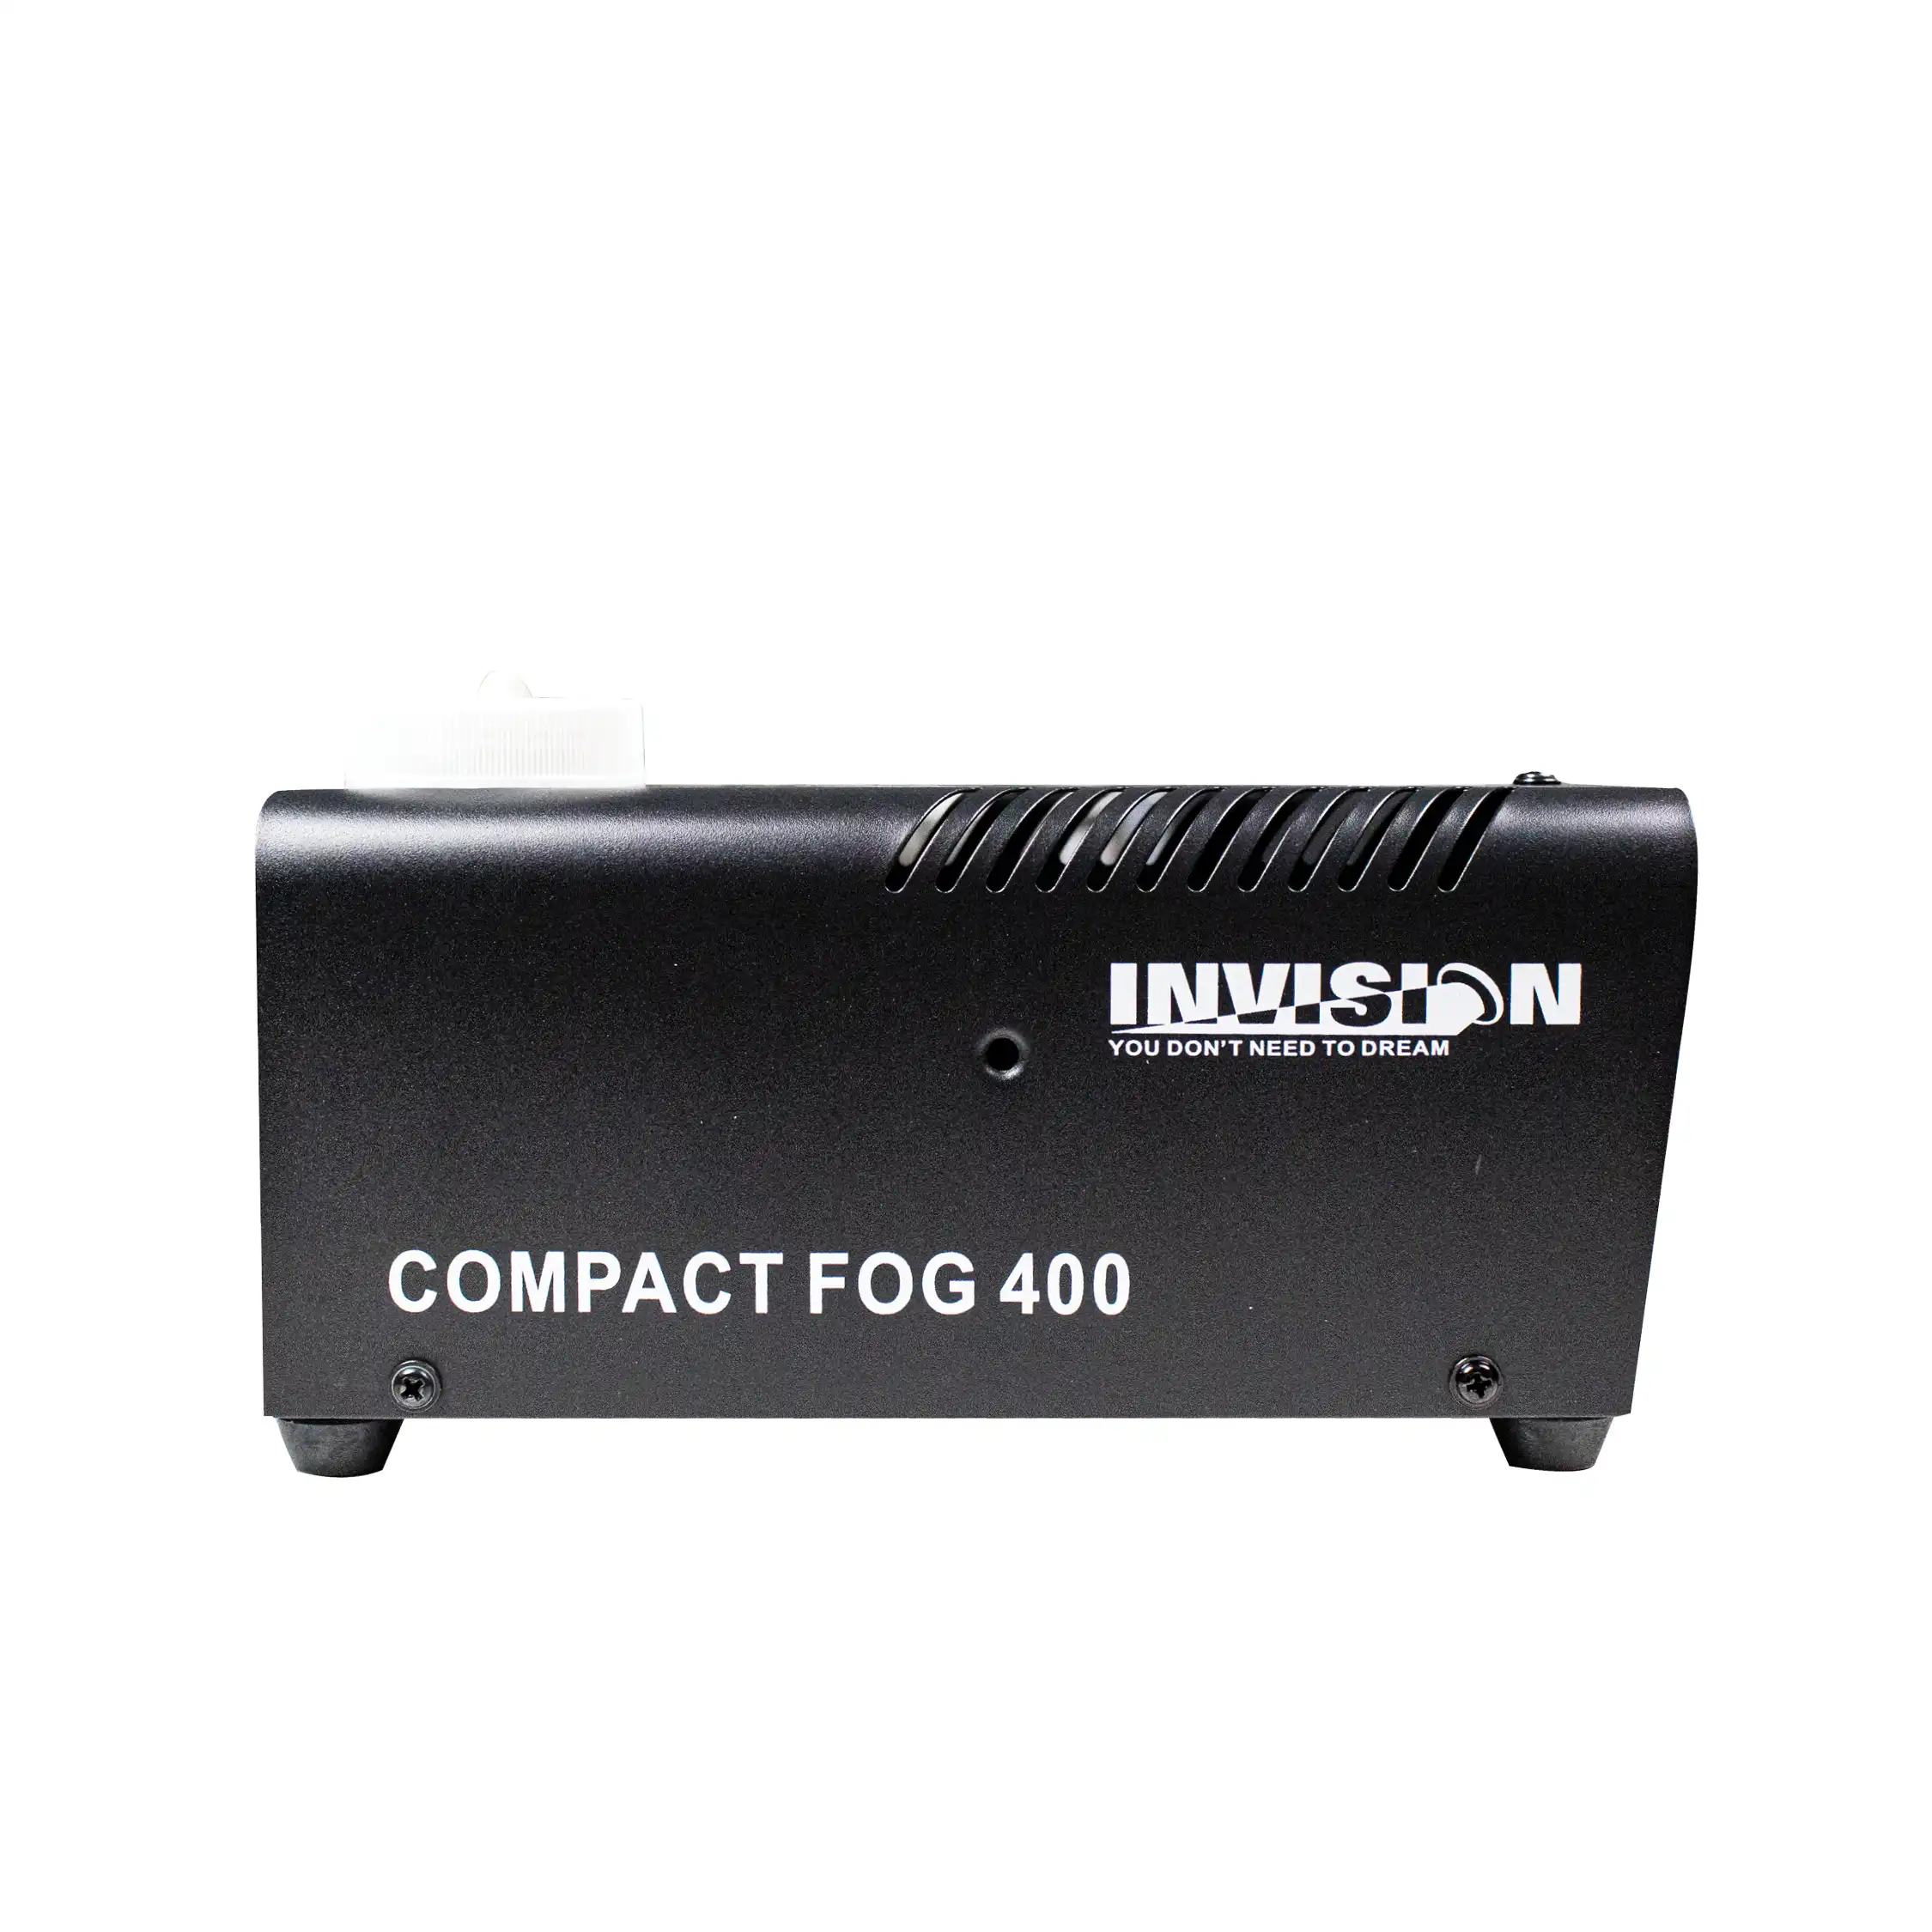 INVISION COMPACT FOG 400 - Dim mašina